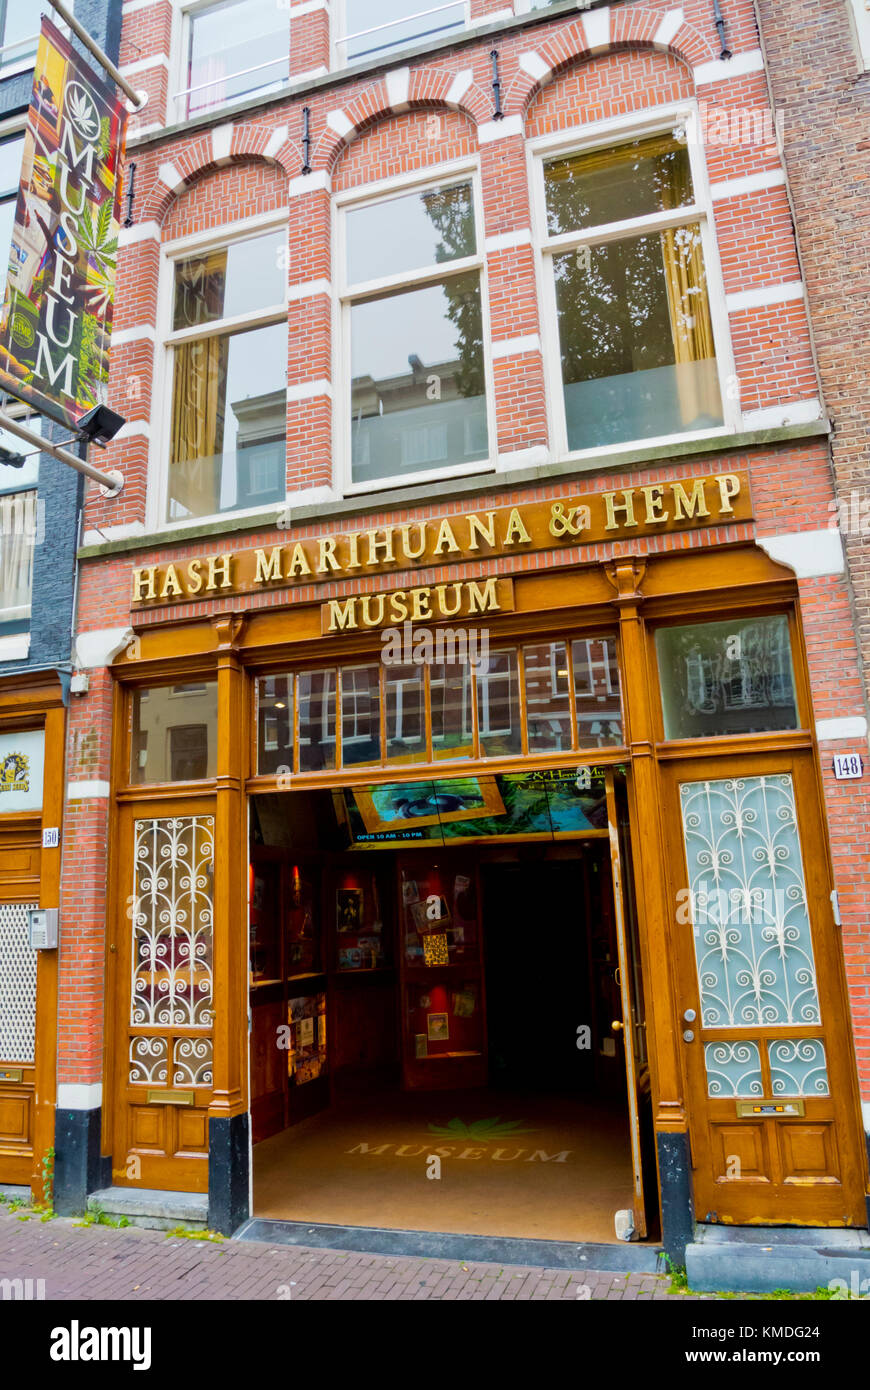 Hash, marihuana and hemp museum, red light district, Amsterdam, The Netherlands Stock Photo